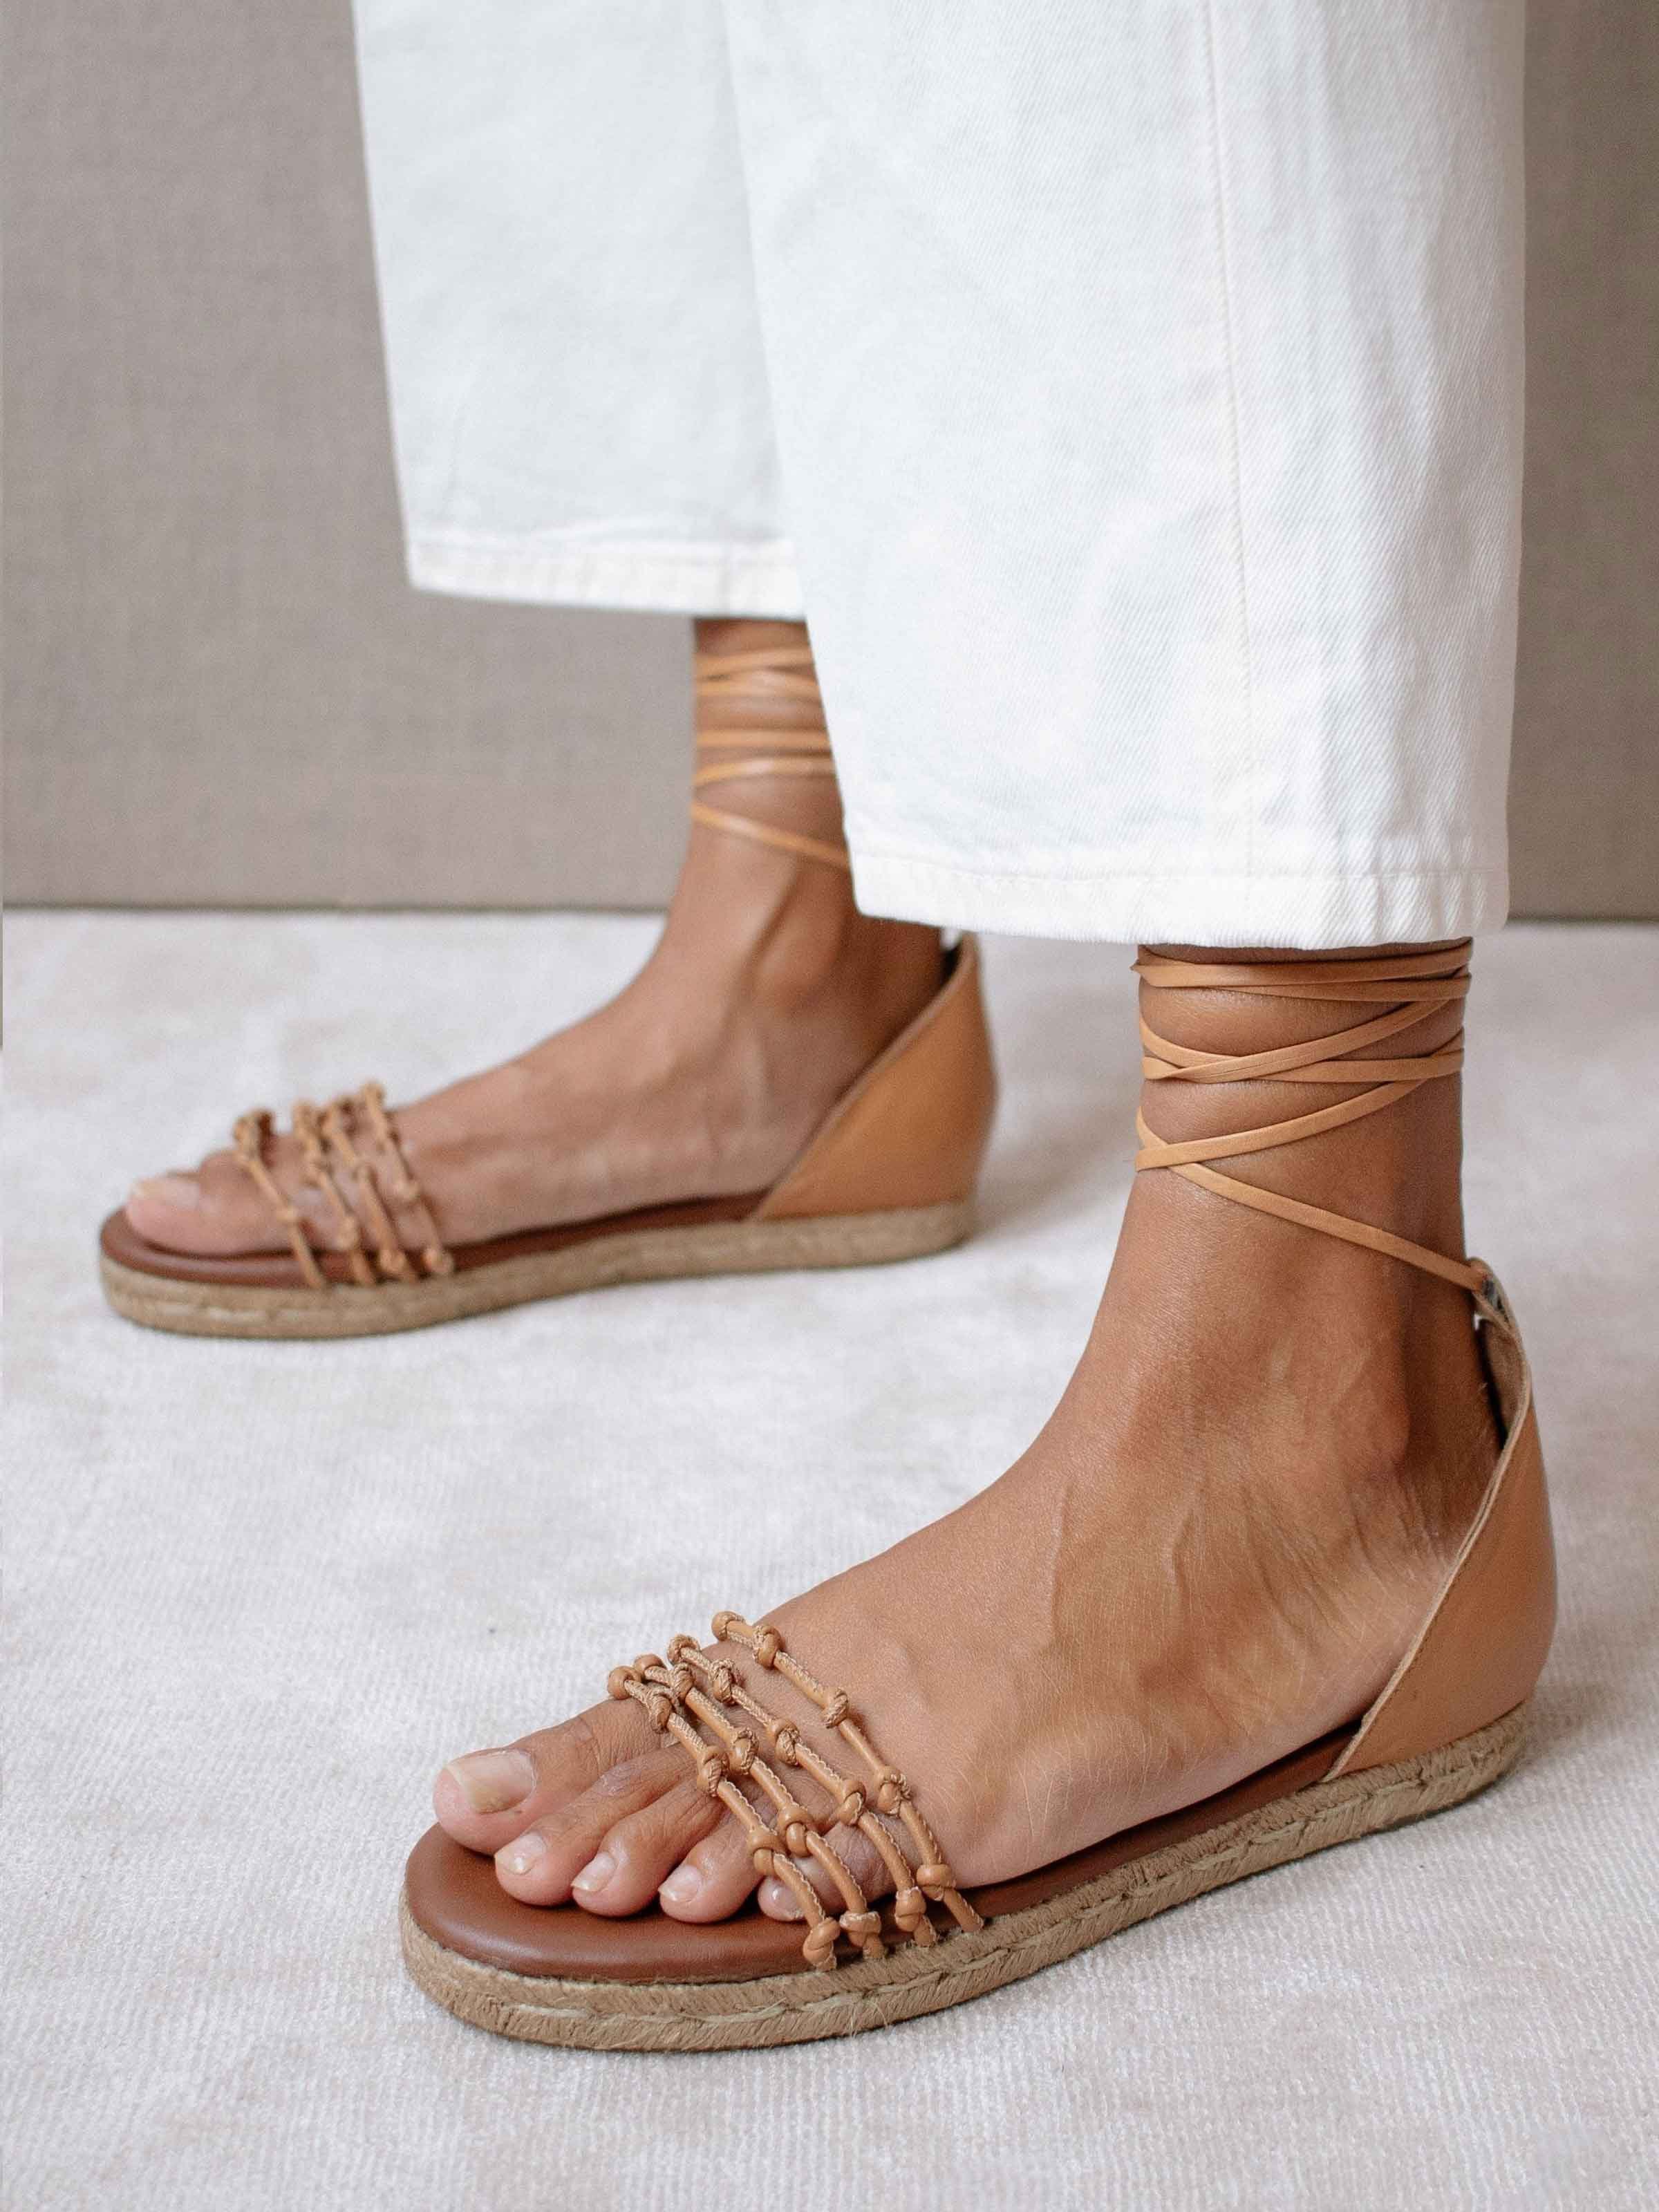 Camelfarbene Schnür-Sandalen aus Leder